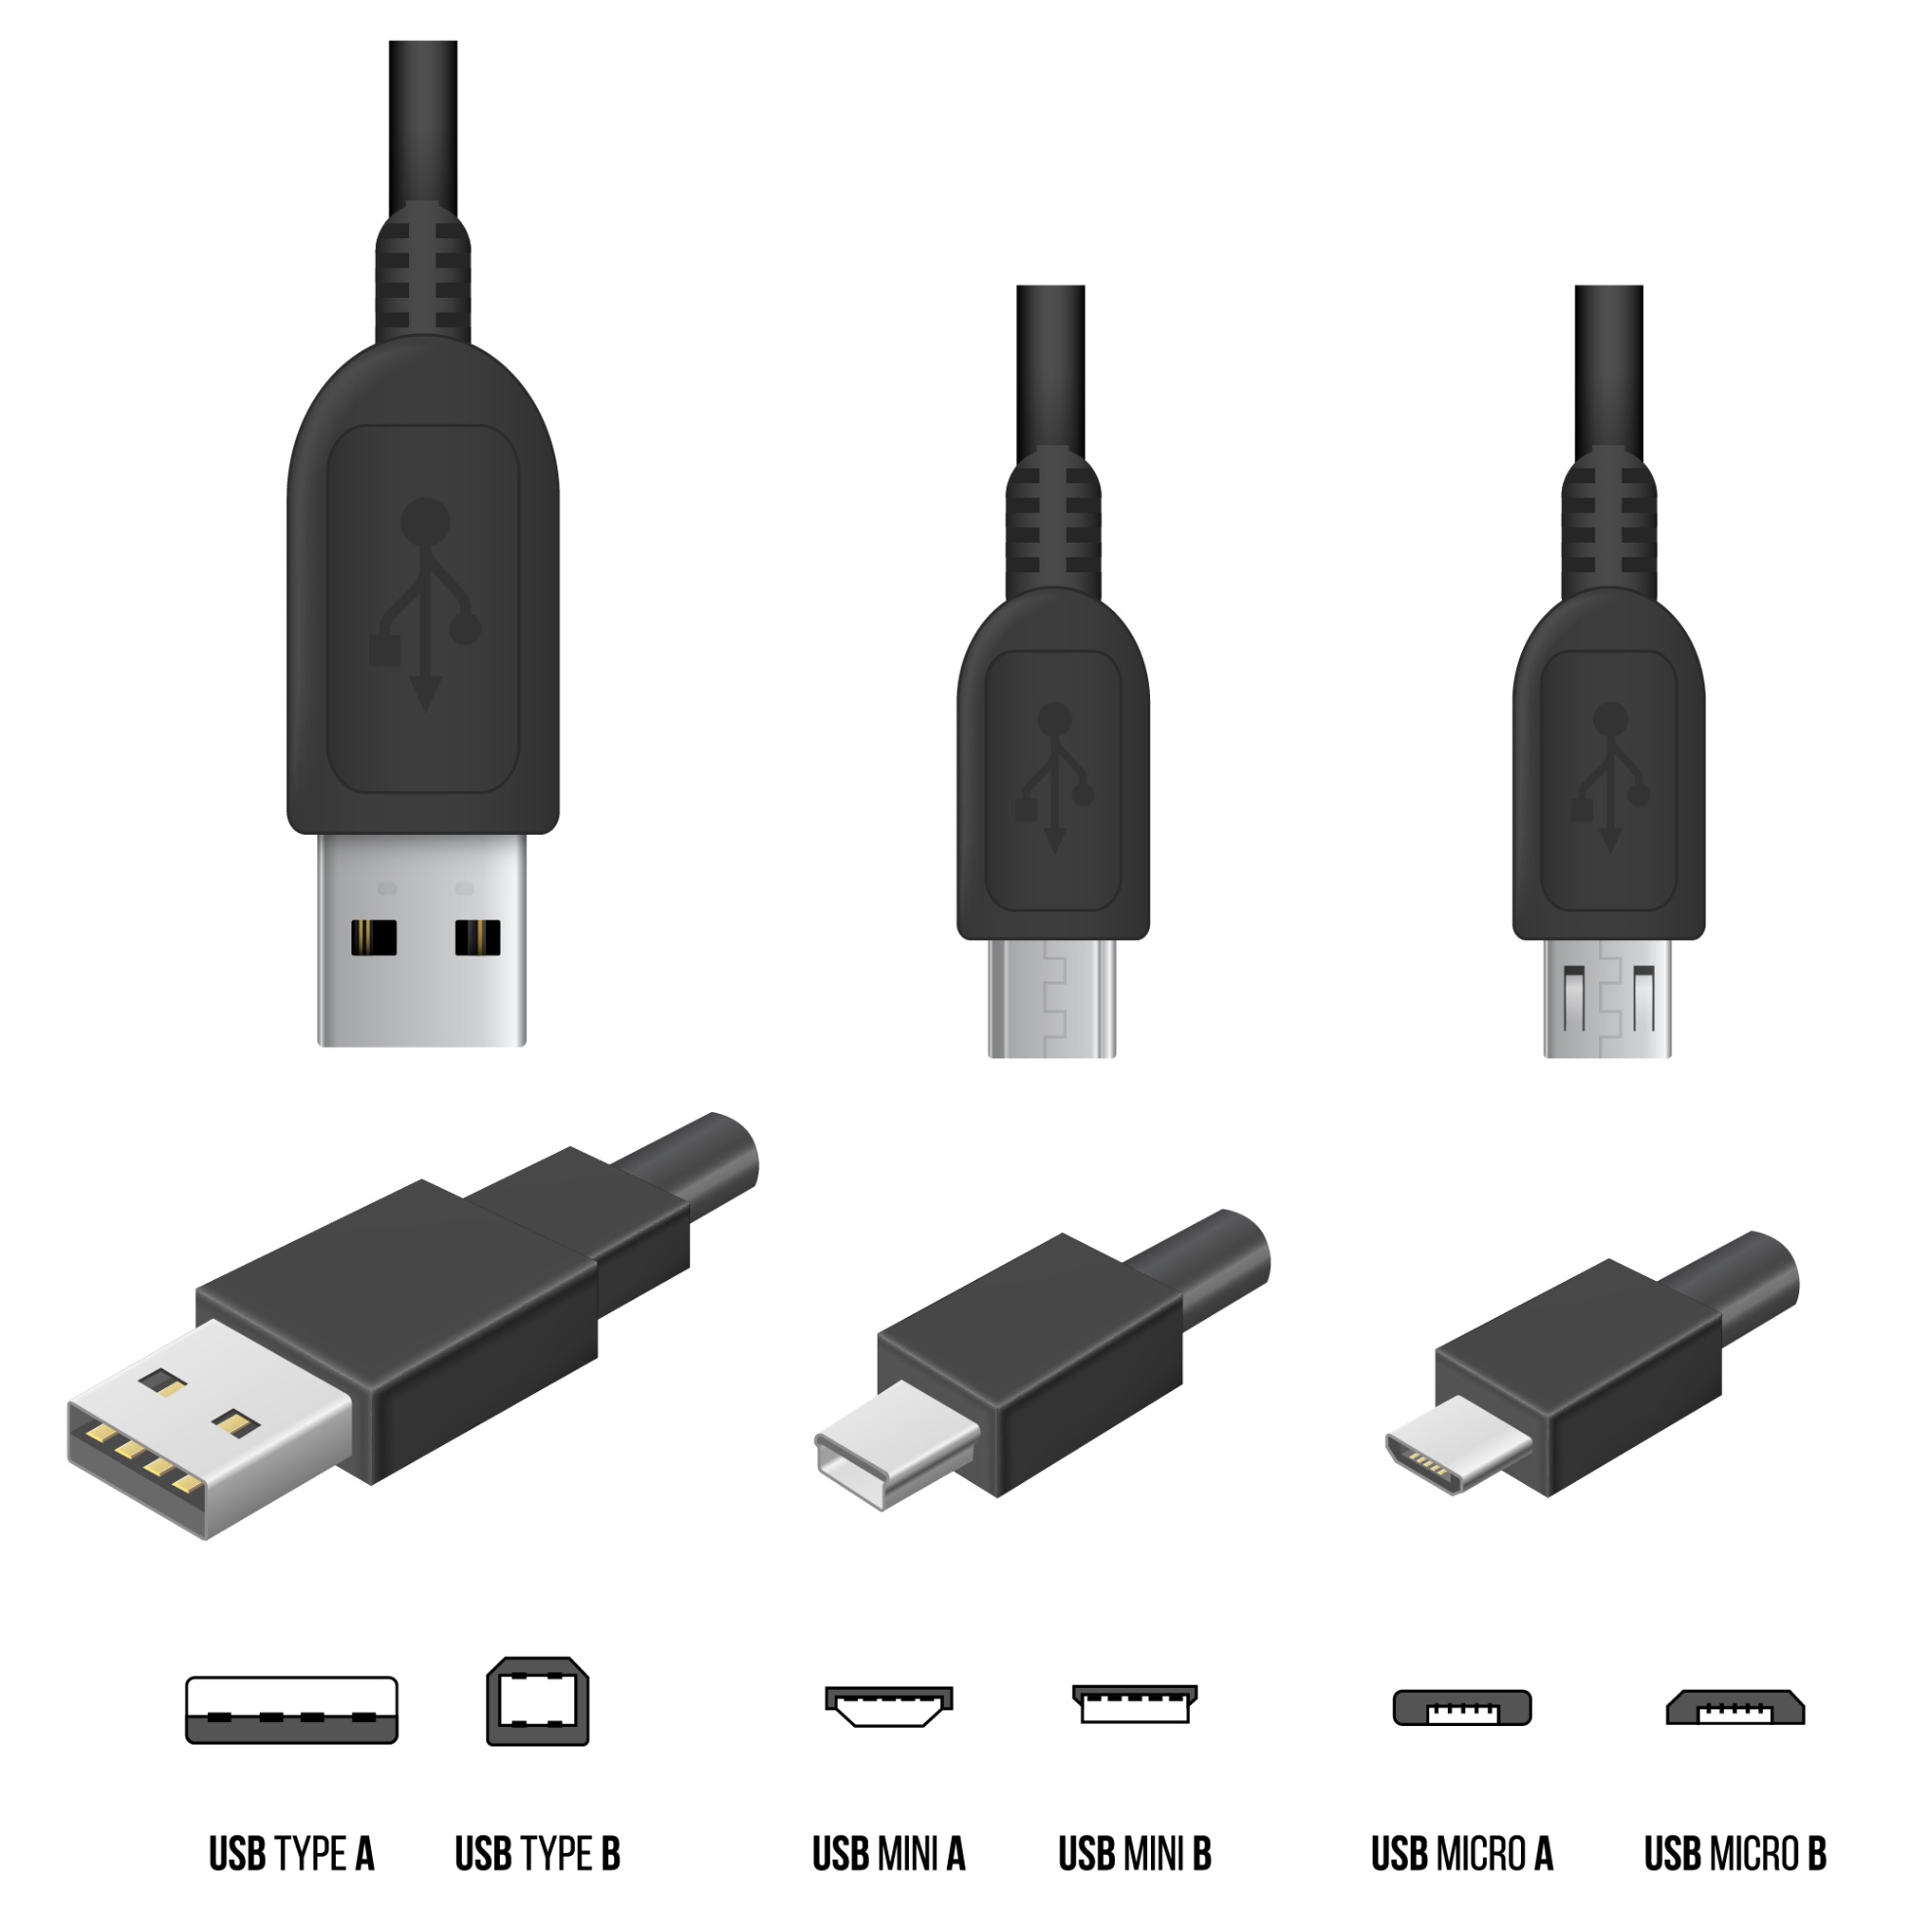 USB Type-A, USB Type-B, USB Mini-A, USB Mini-B, USB Micro-A, USB Micro-B connectors